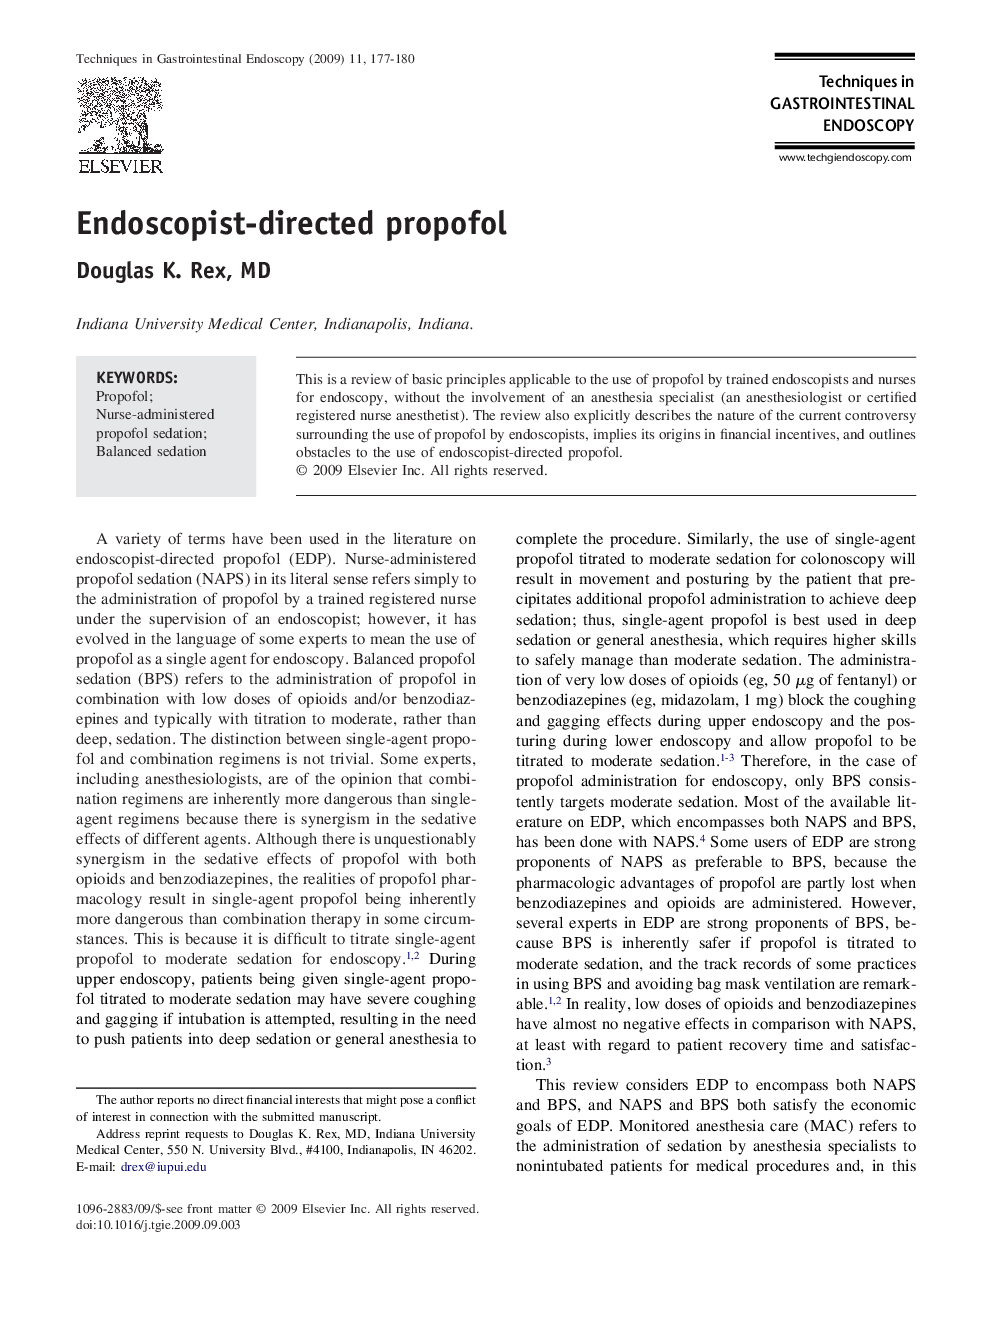 Endoscopist-directed propofol 